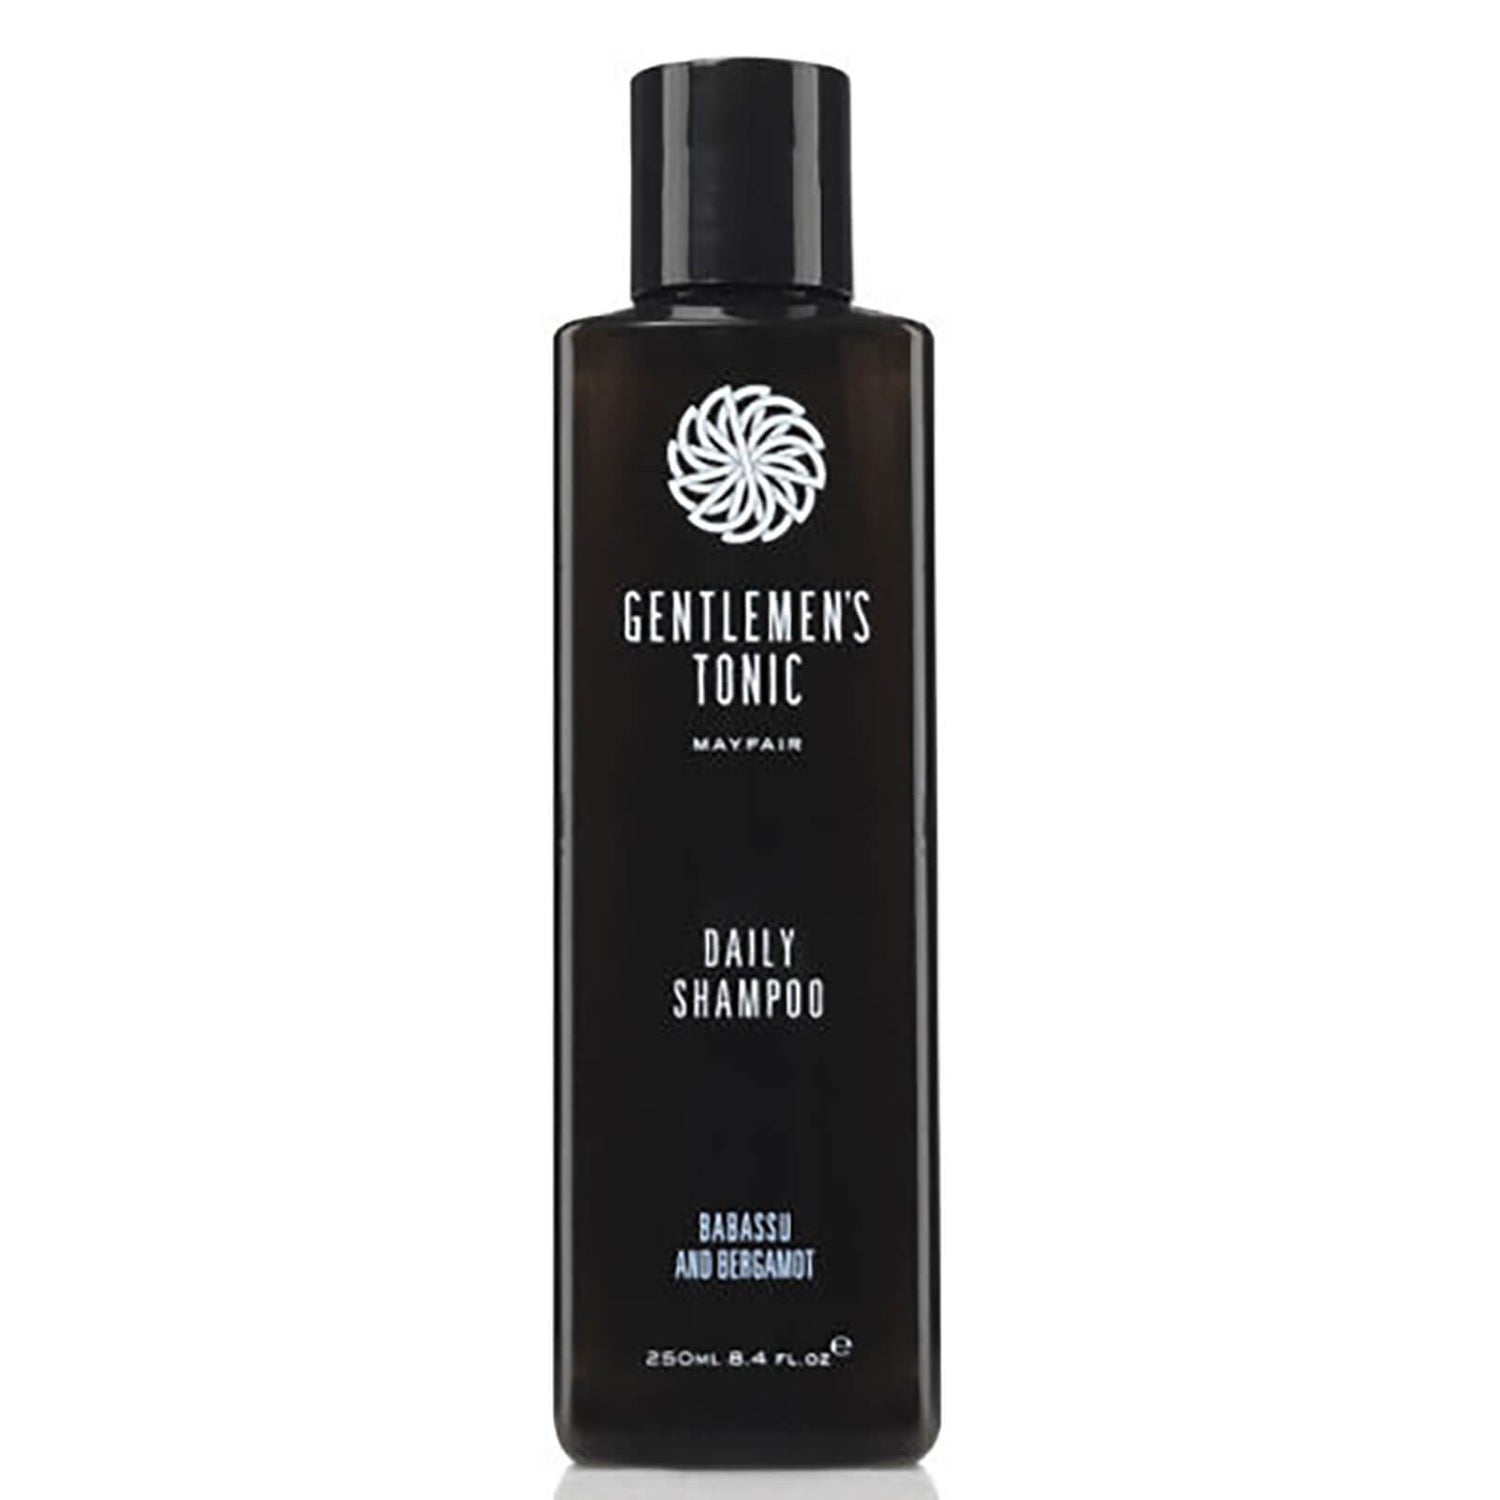 Gentlemen's Tonic Daily Shampoo (8.4oz)